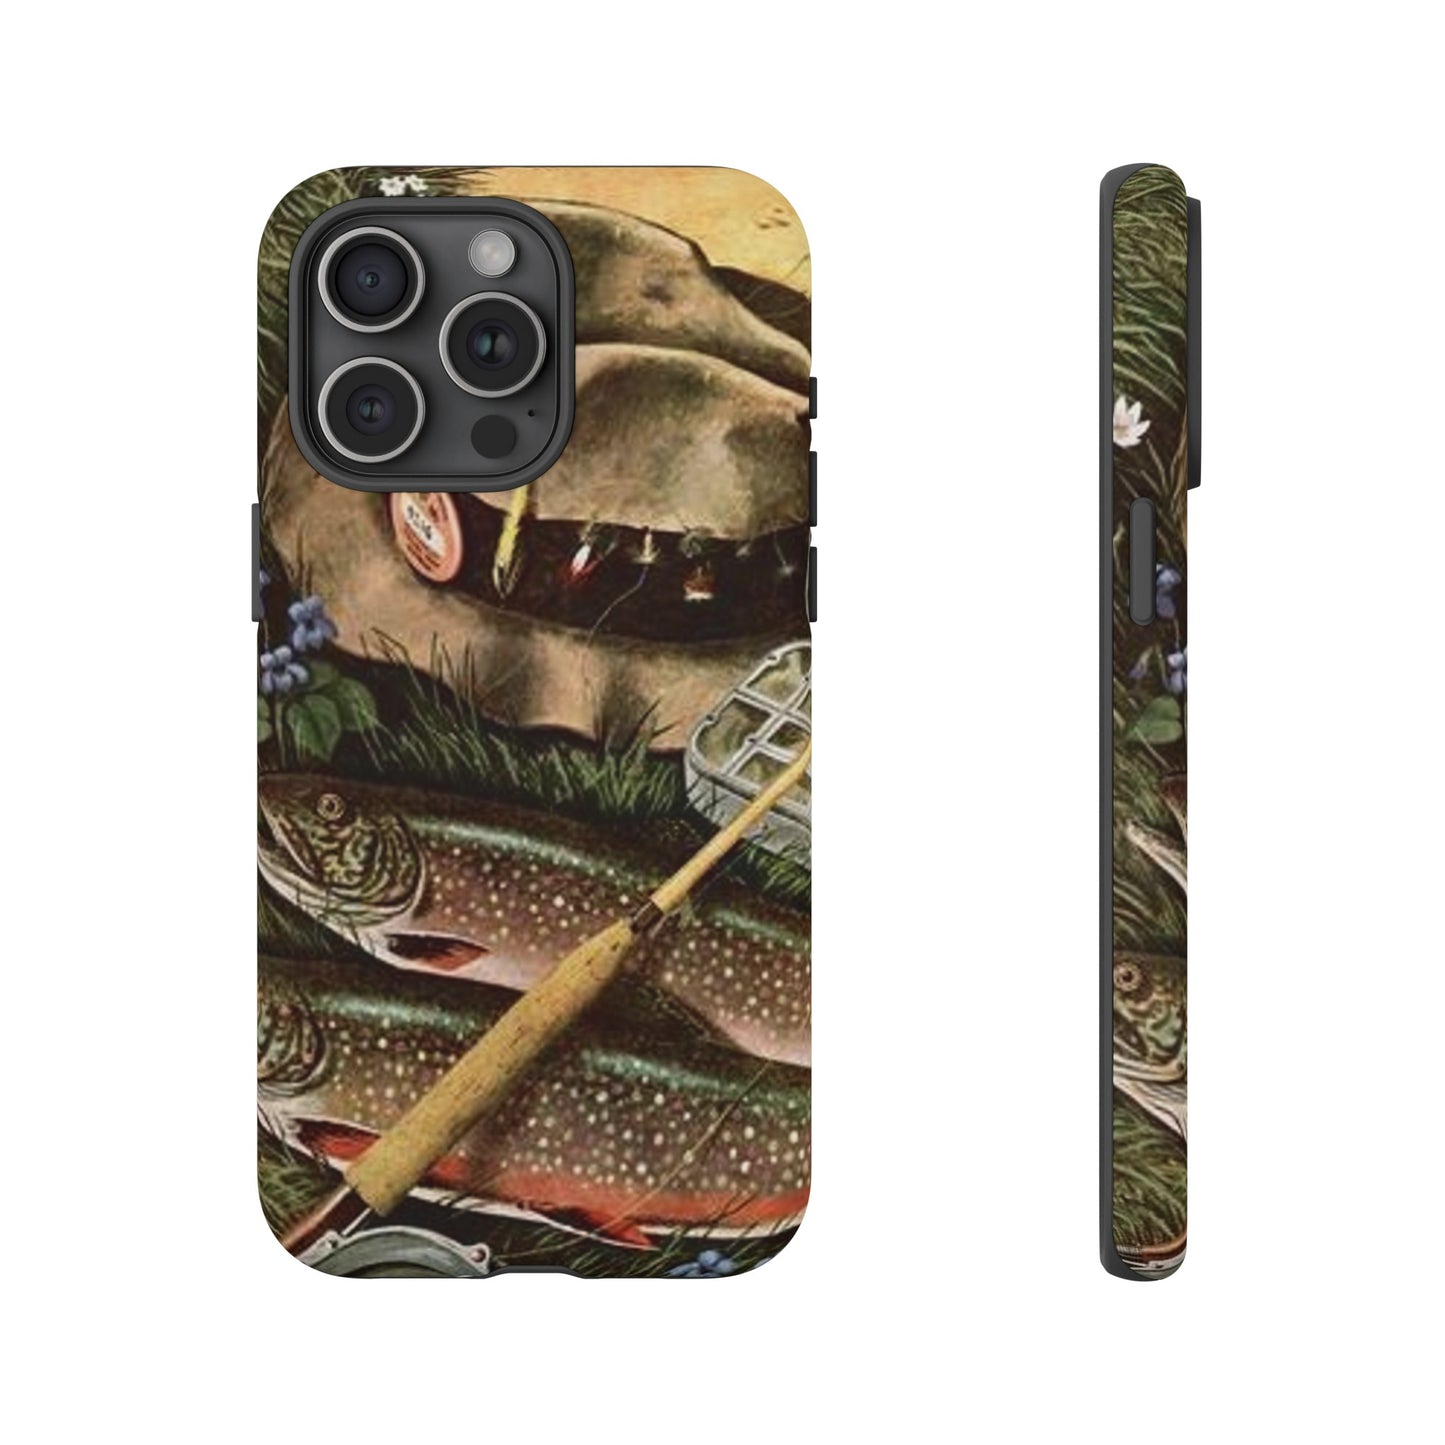 Flyfishing Phone Case, Fishing Iphone Case, Fishing Samsung Galaxy Case, Google Pixel Case, Fish Phone Case